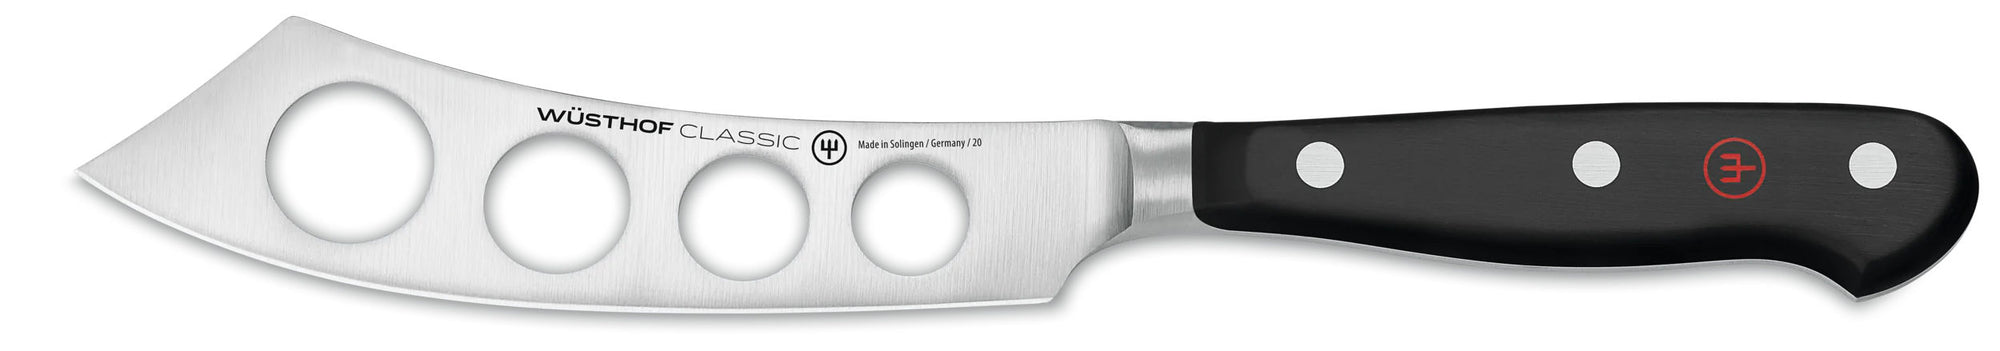 Wusthof Classic Cheese Knife, Soft Cheese, 5.5-inch (14 cm) - 3102-14 Canada